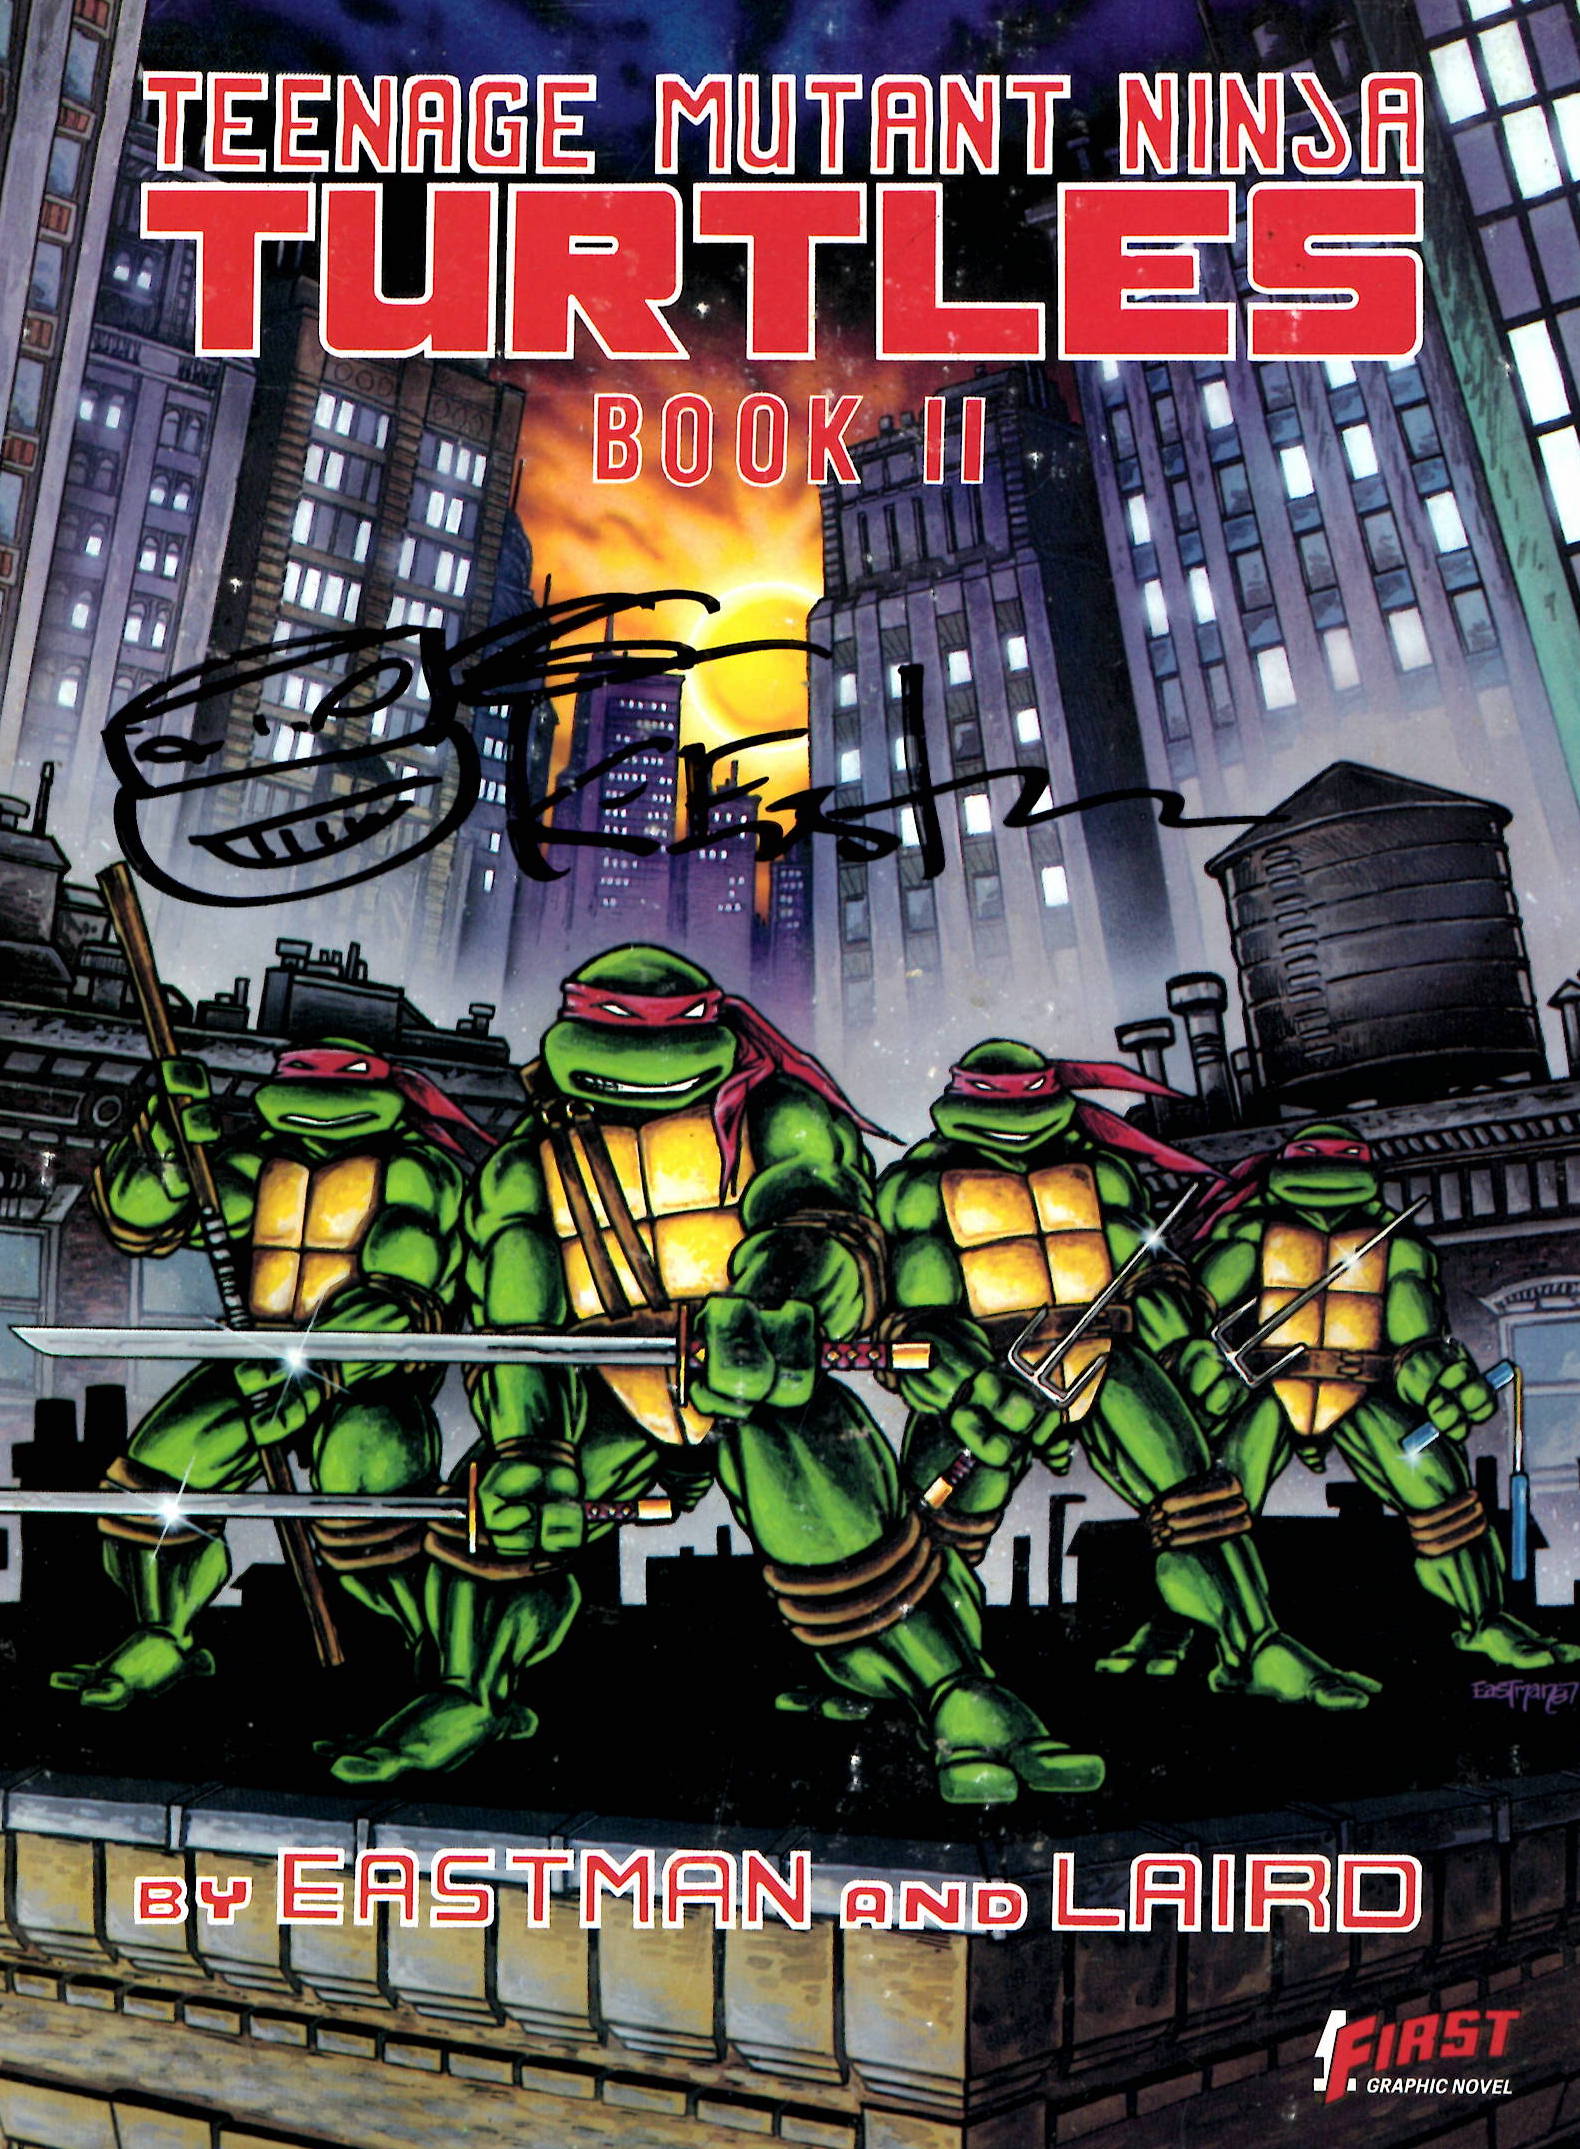 Teenage Mutant Ninja Turtles #3 Certificado Garantía Corporation 9.4 páginas blancas/1ST impresión Kevin Eastman 